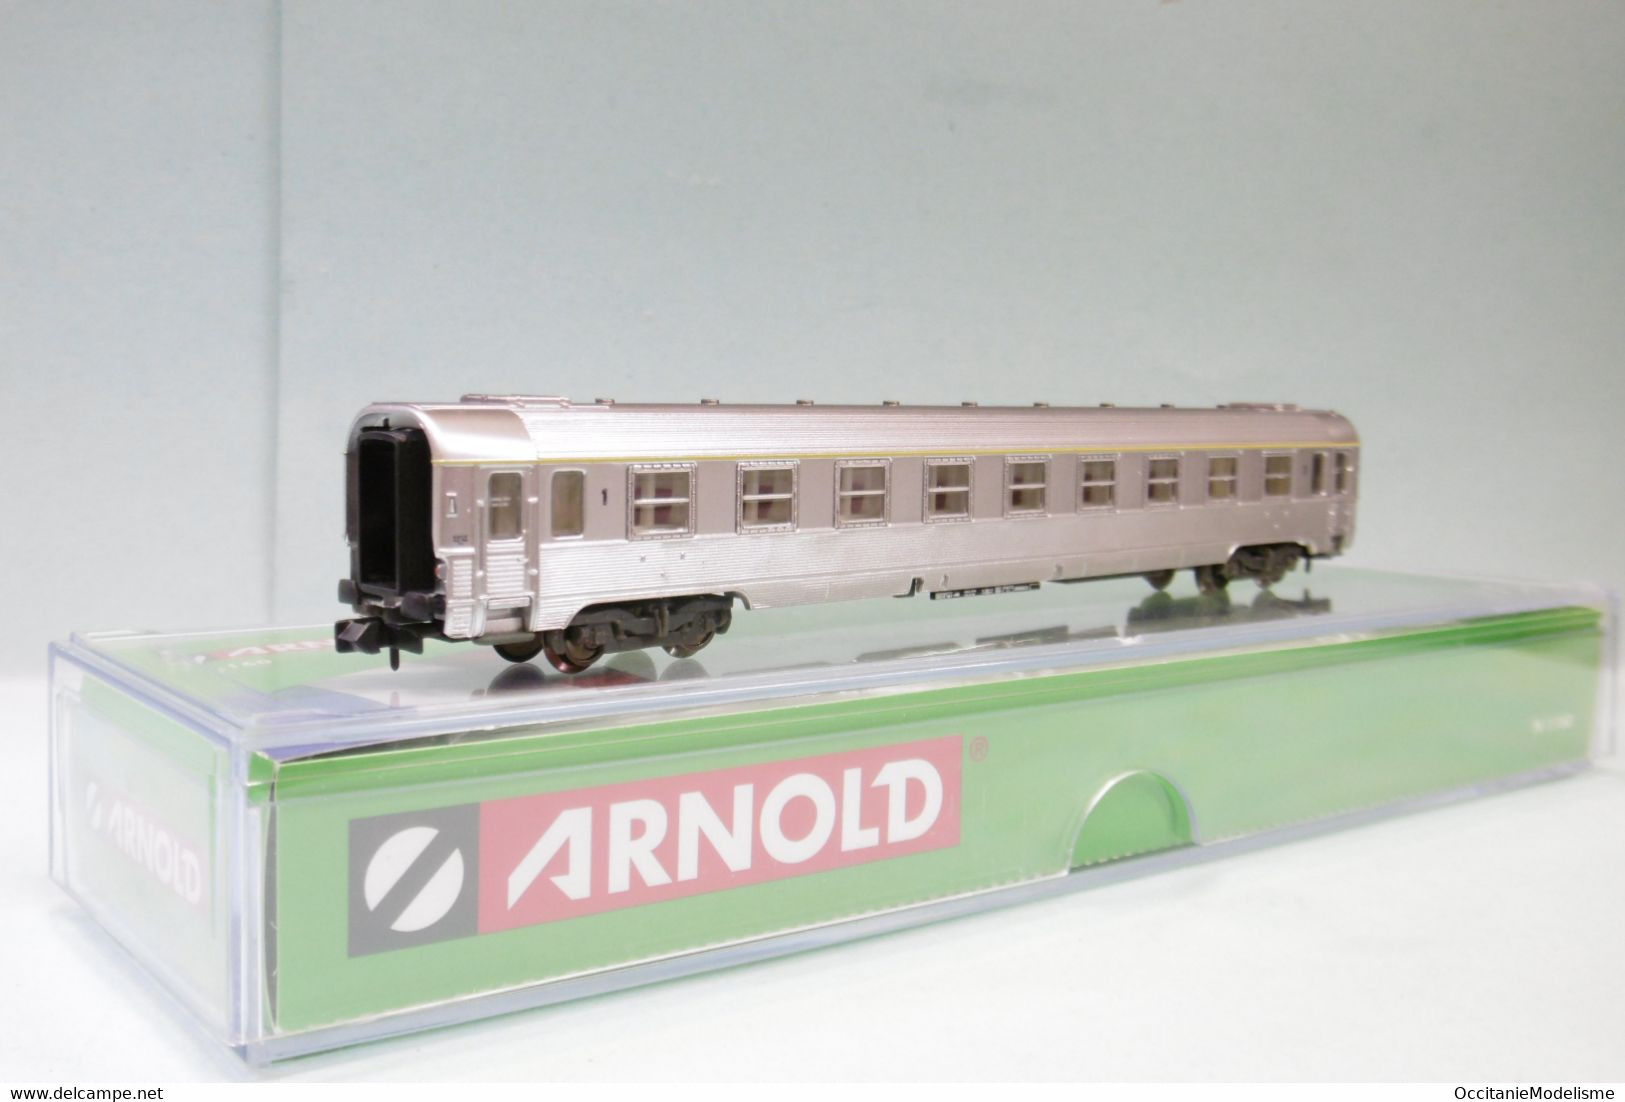 Arnold - Voiture DEV INOX A9 1ère Classe SNCF ép. III Réf. HN4323 Neuf N 1/160 - Scompartimento Viaggiatori